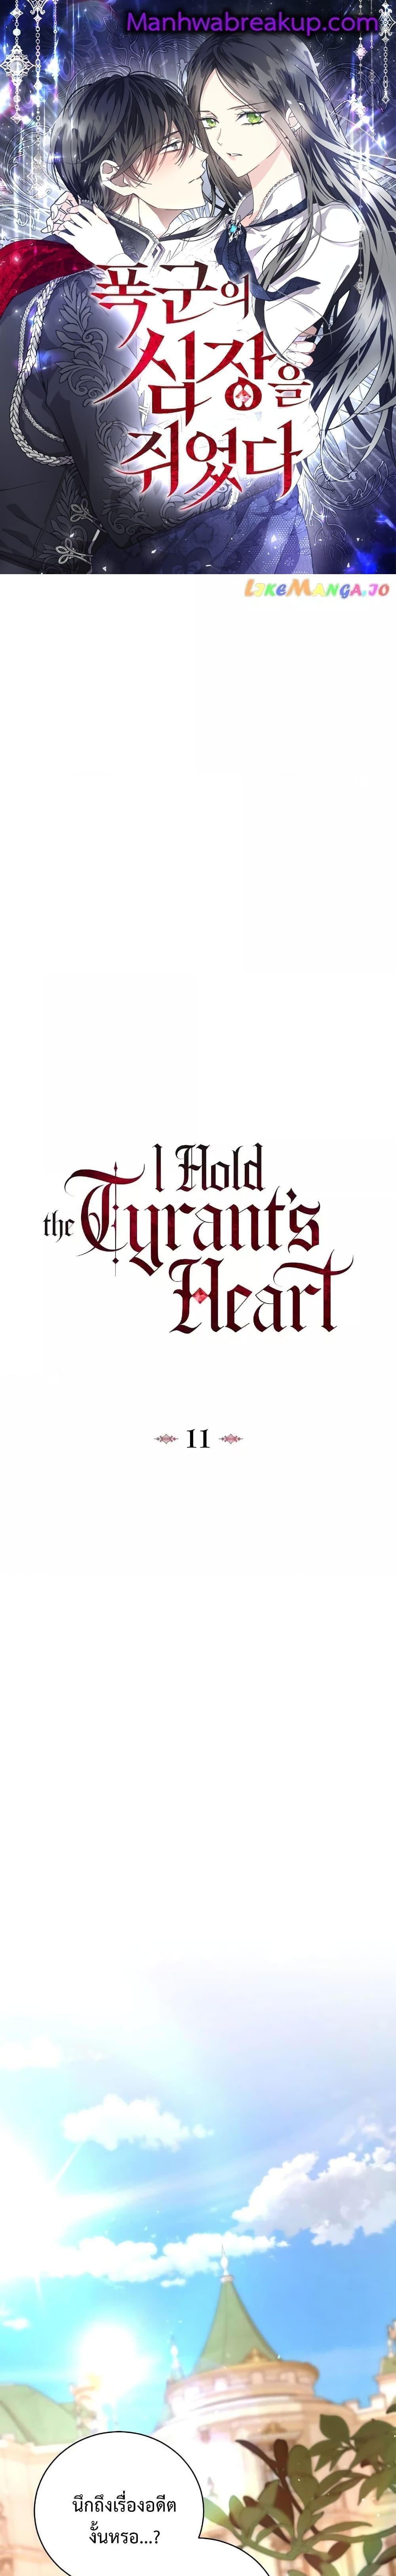 I Grabbed the Tyrant’s Heart ตอนที่ 11 (1)